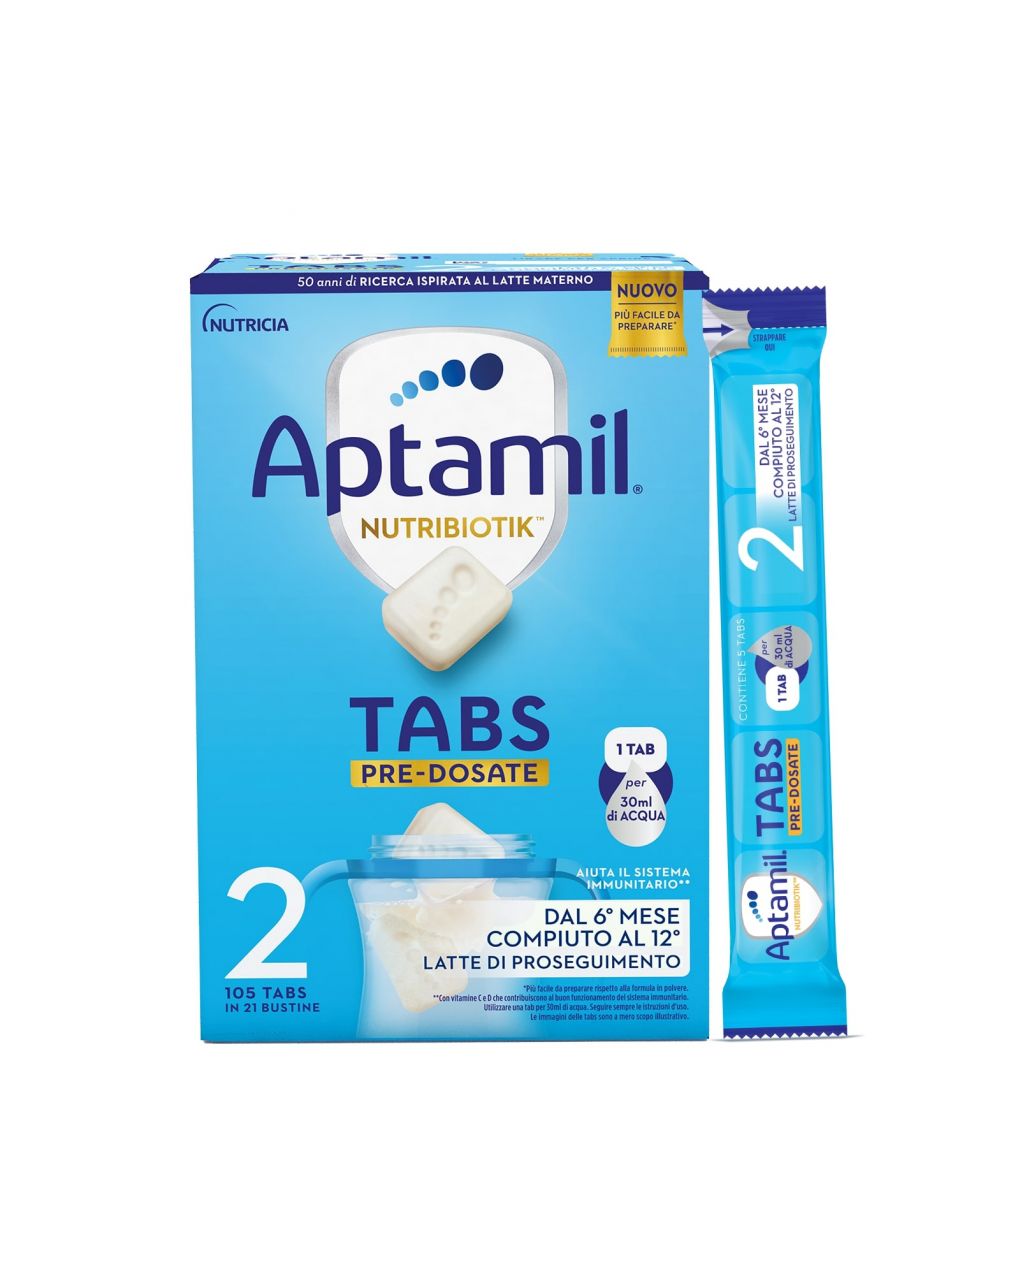 Nutribiotik tabs 2 pre-dosate - latte di proseguimento in tabs 6-12 mesi - 21 bustine (105 tabs) - aptamil